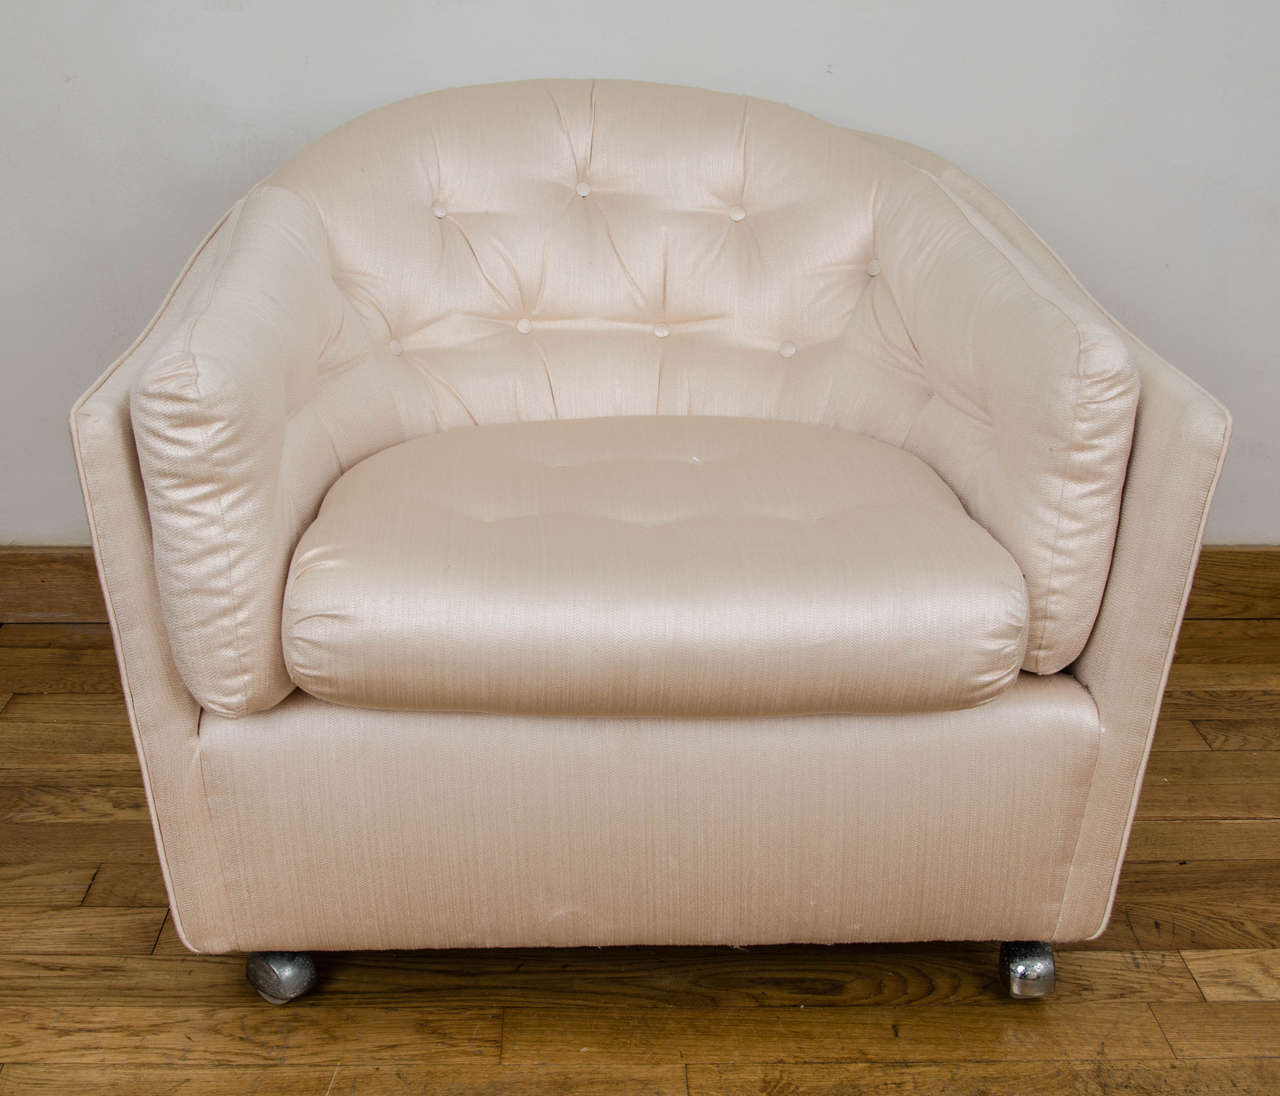 Wonderful 1930s ivory silk three-piece sofa set.
Original fabric in good condition.
All chairs glide on chrome castors.
Detachable cushion.